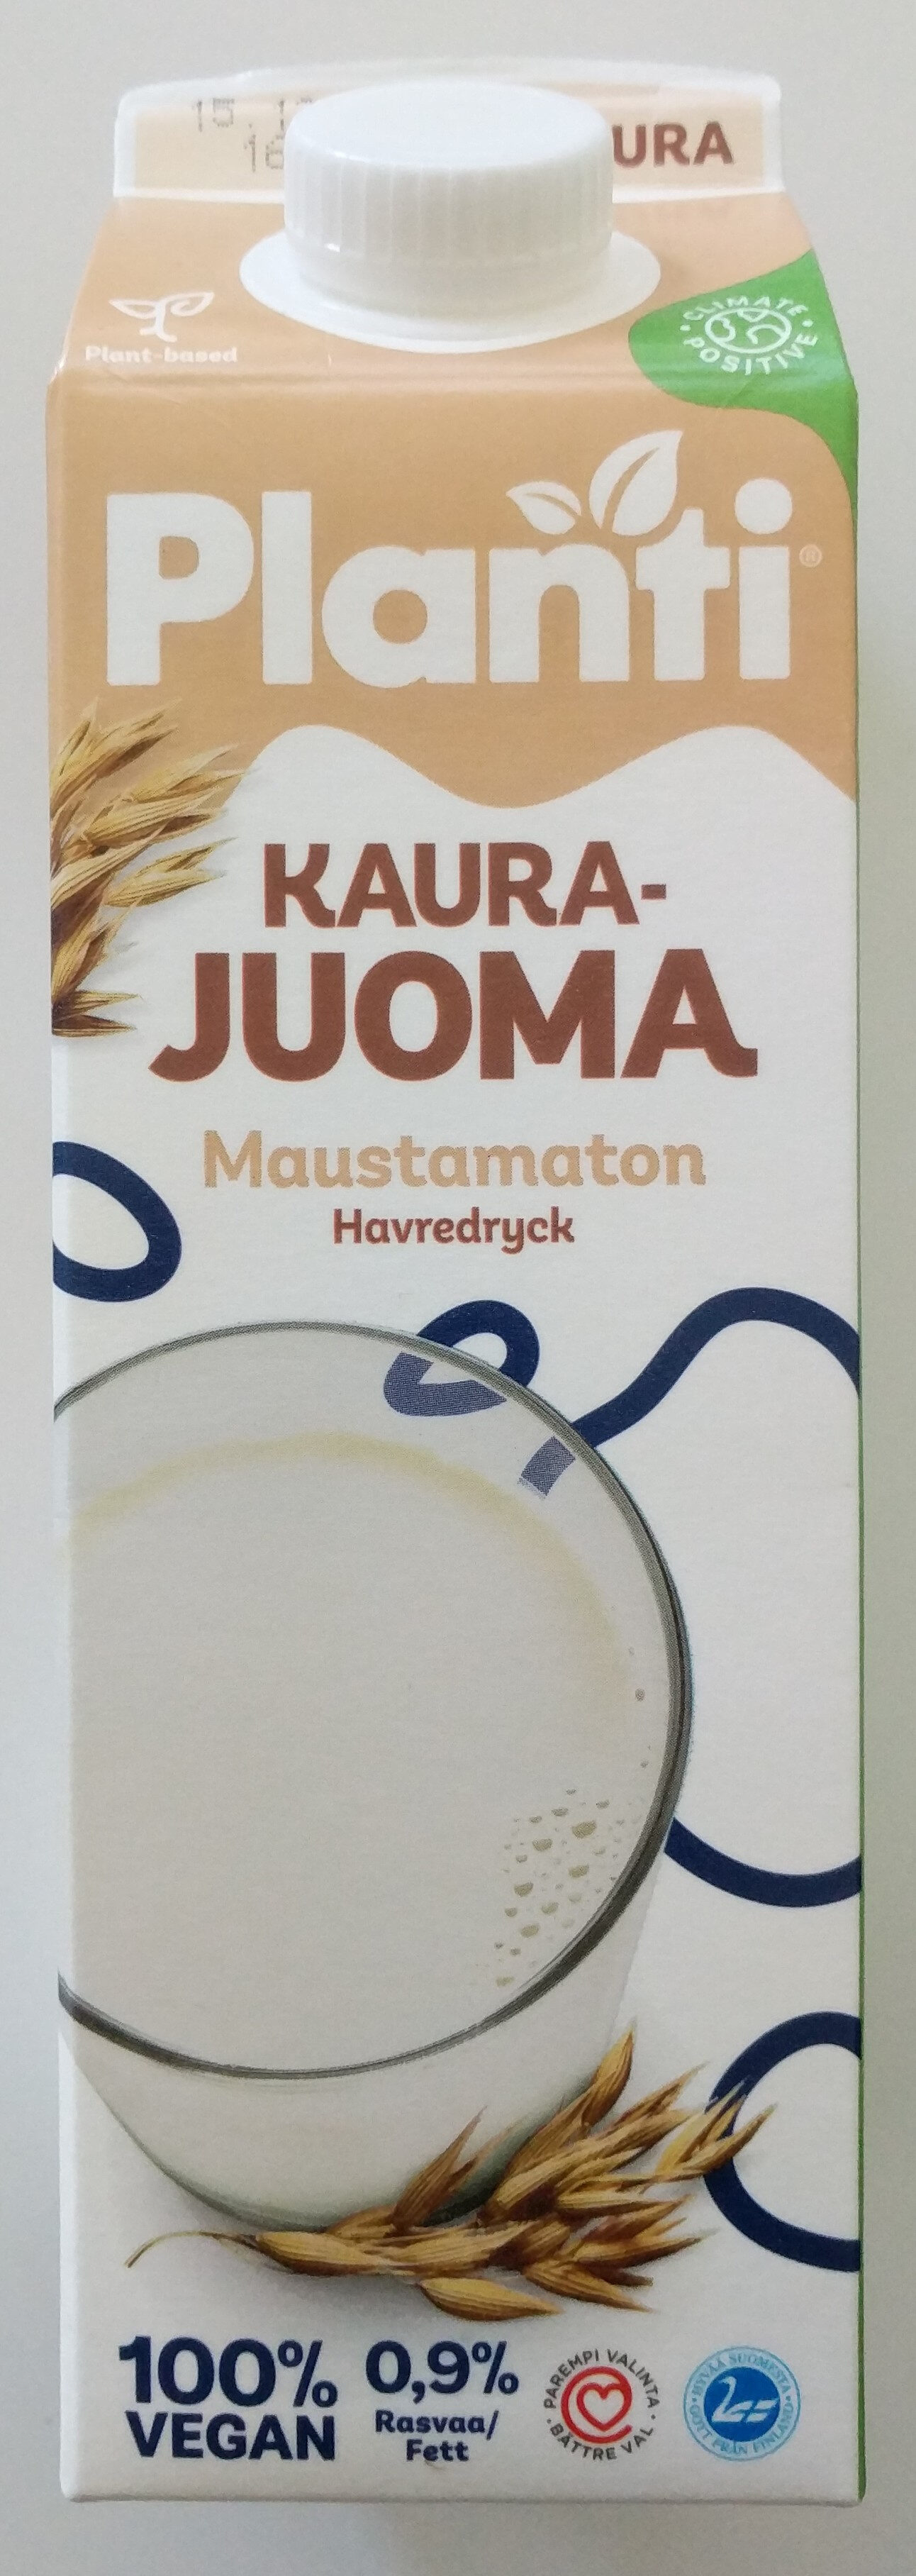 Kaurajuoma Maustamaton - Product - fi